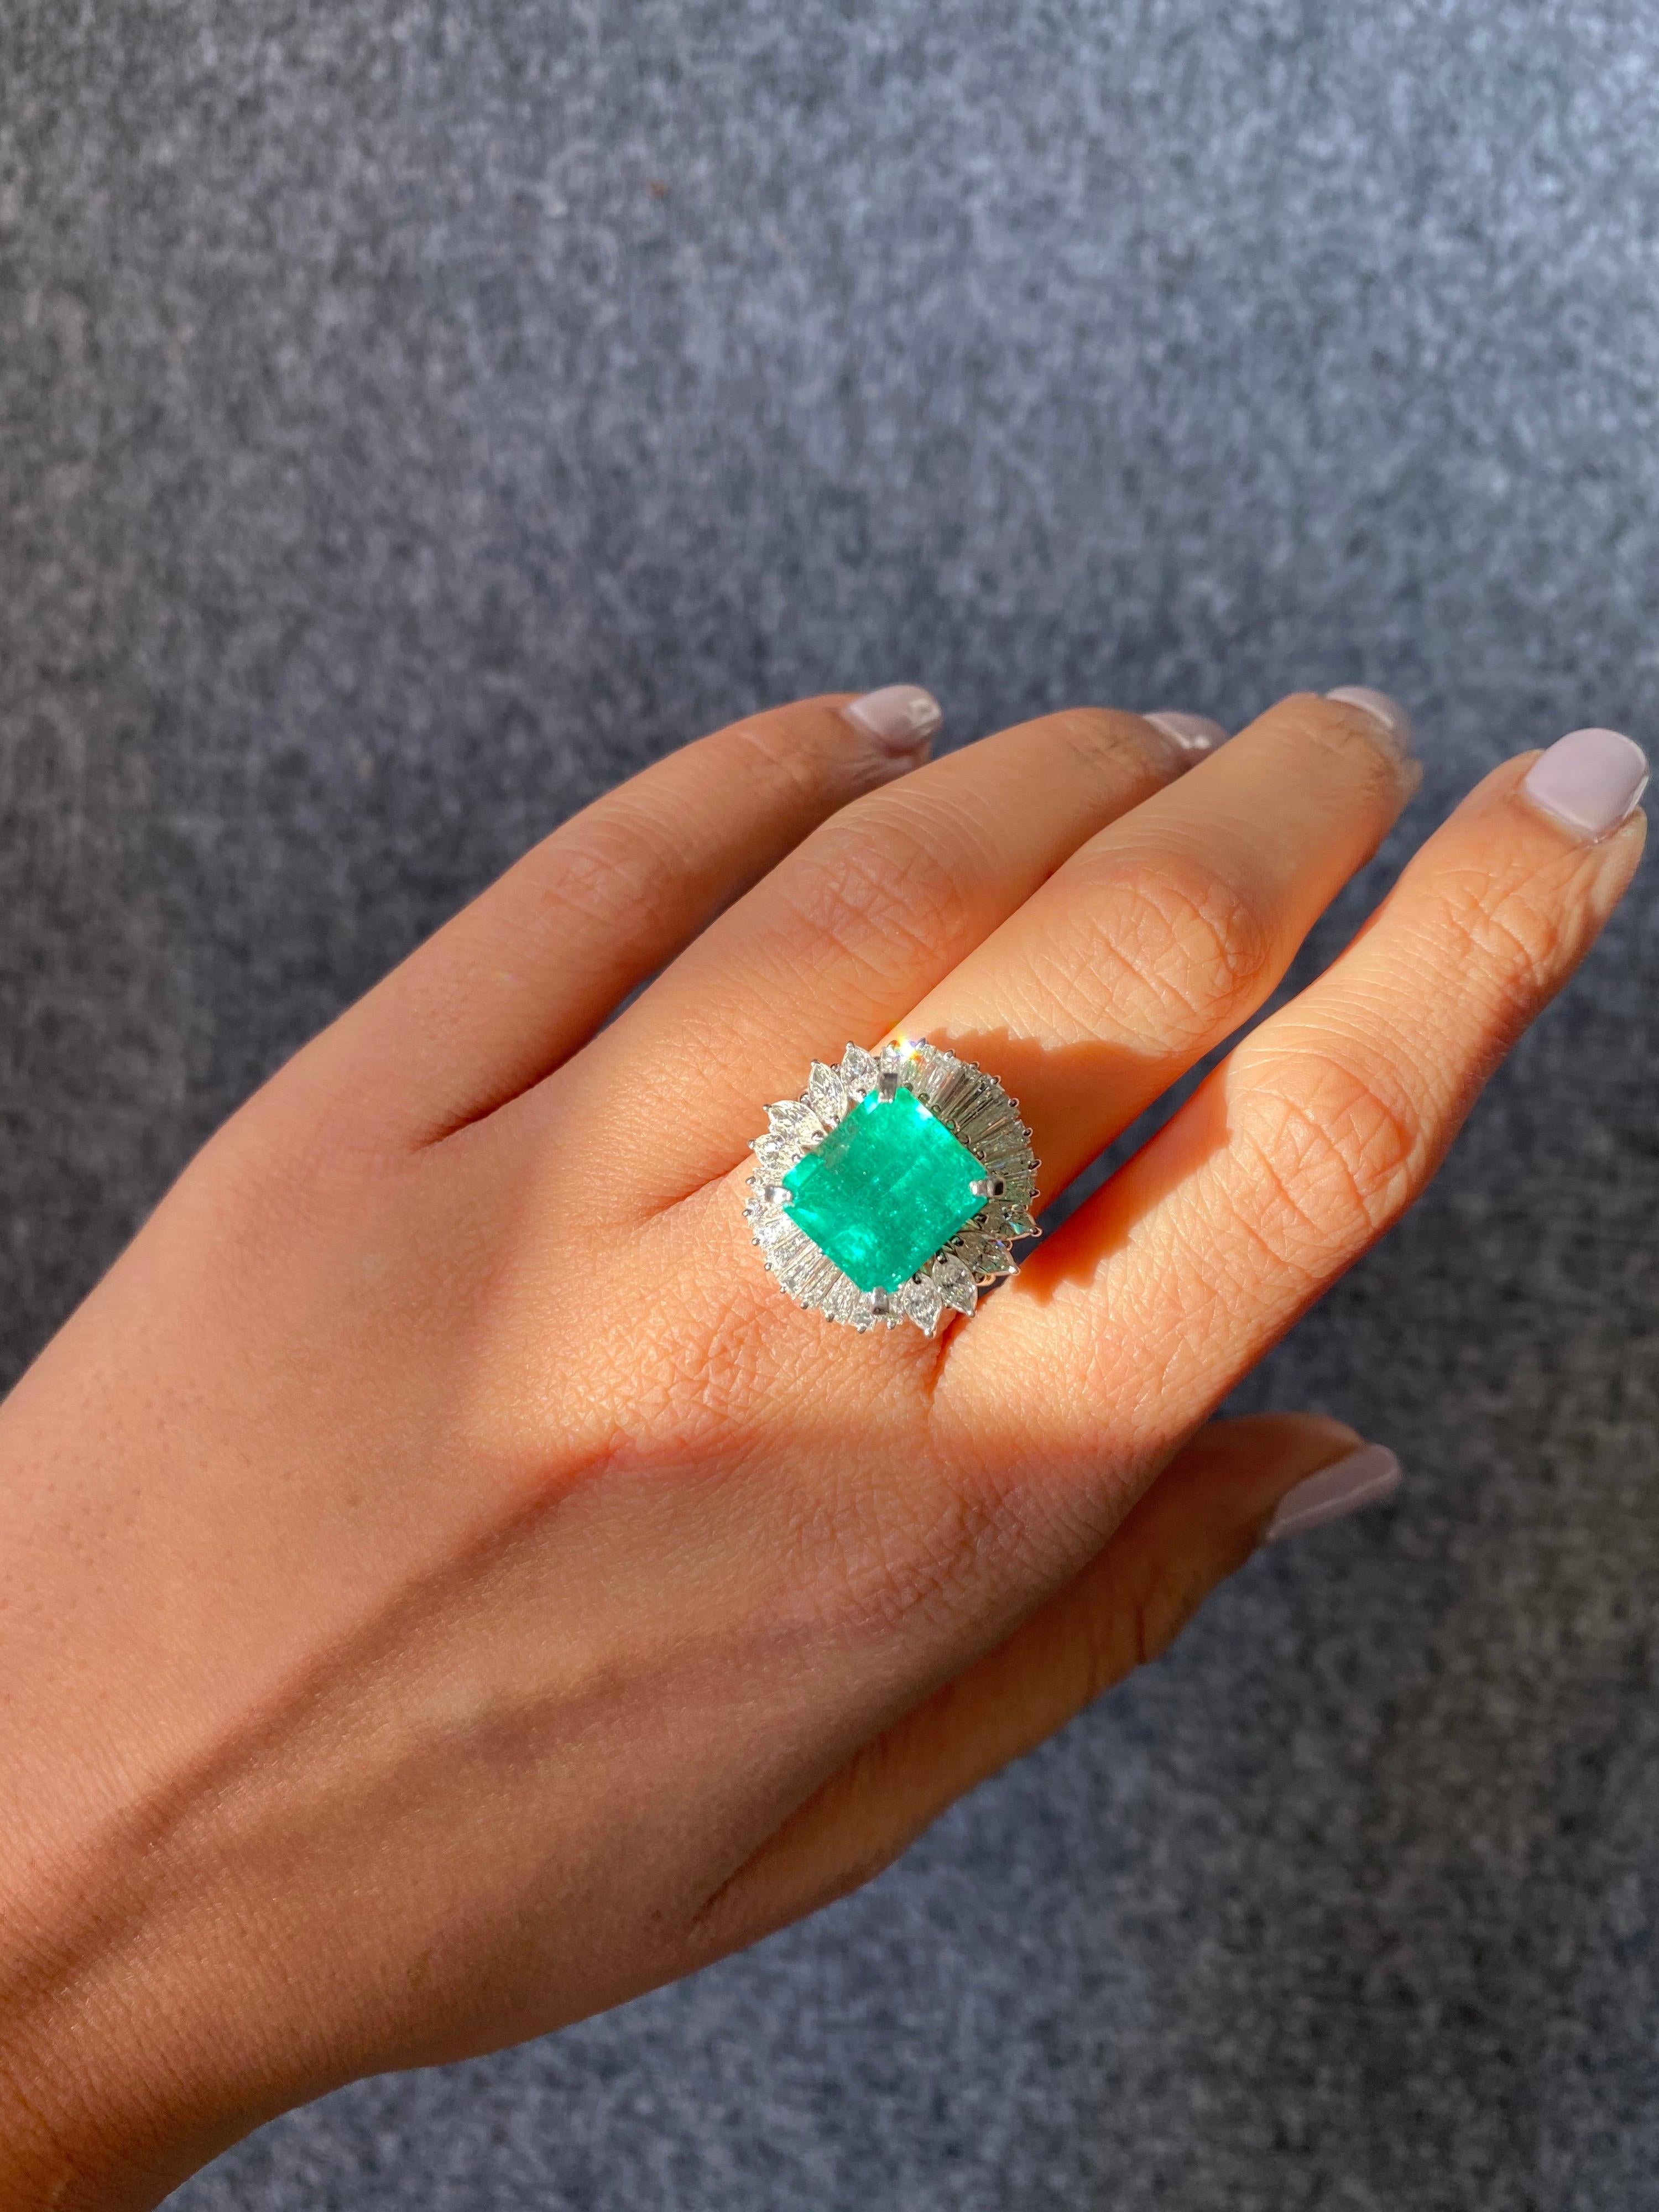 Emerald Cut Certified 6.85 Carat Colombian Emerald, Diamond and Platinum Ring